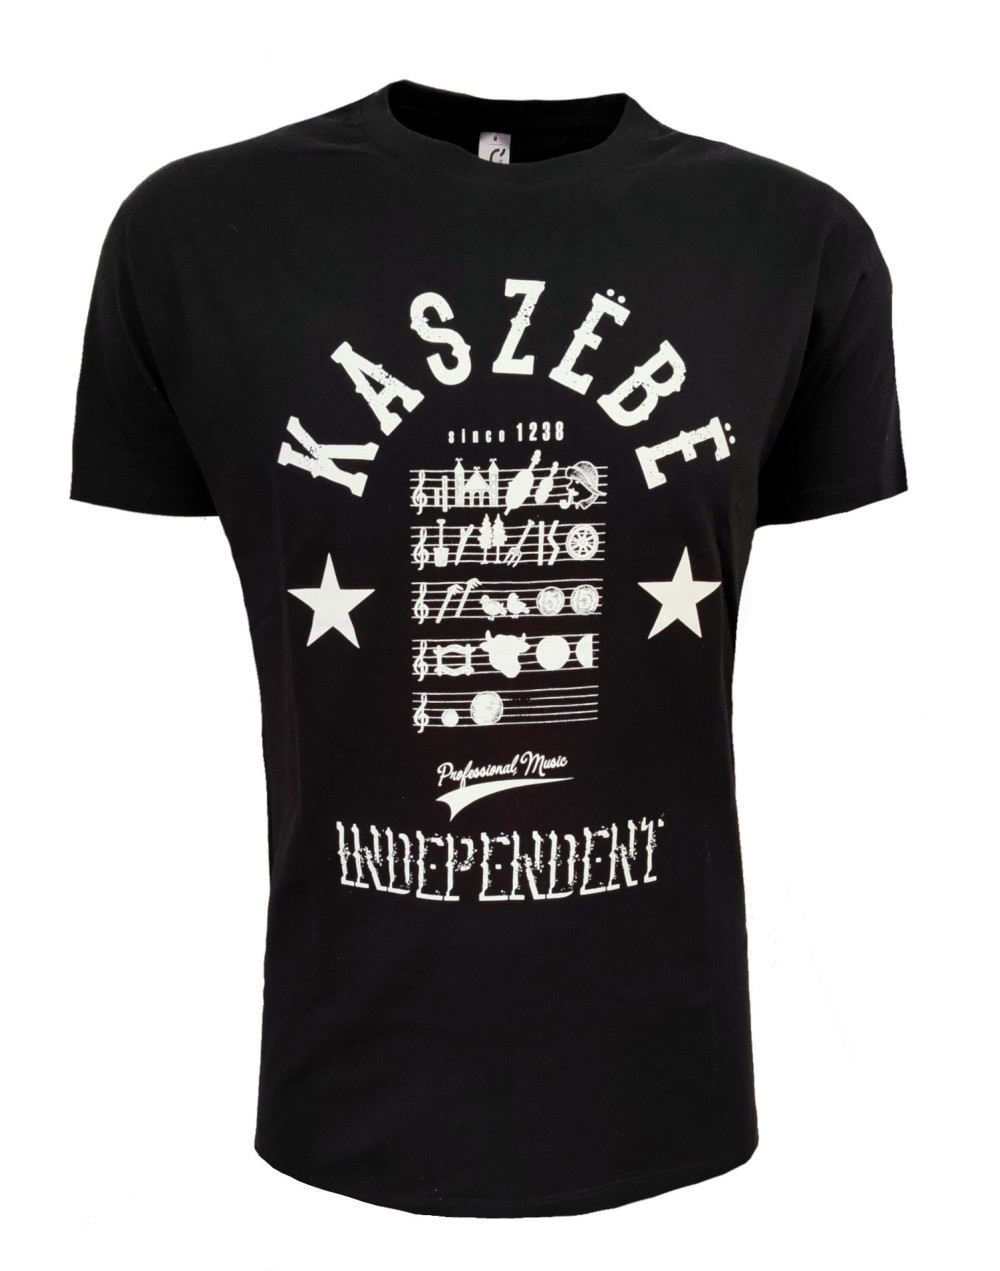 T-shirt męski KASZEBE BLACK koszulka bawełna S-3XL